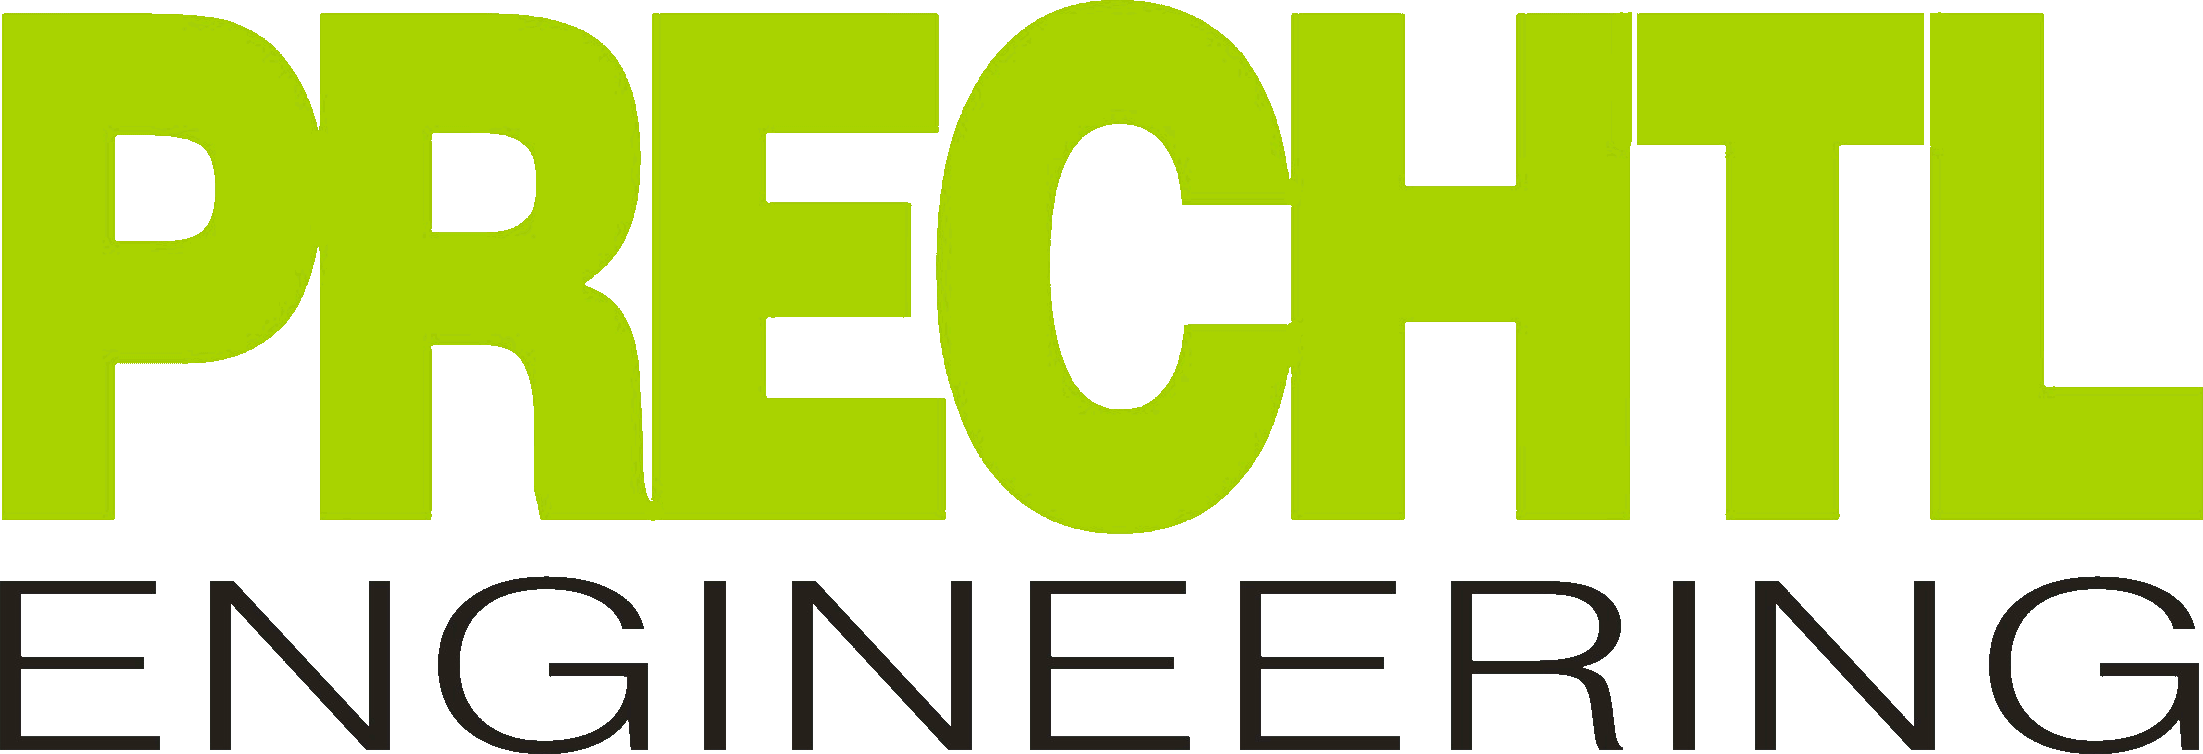 Prechtl Engineering Logo